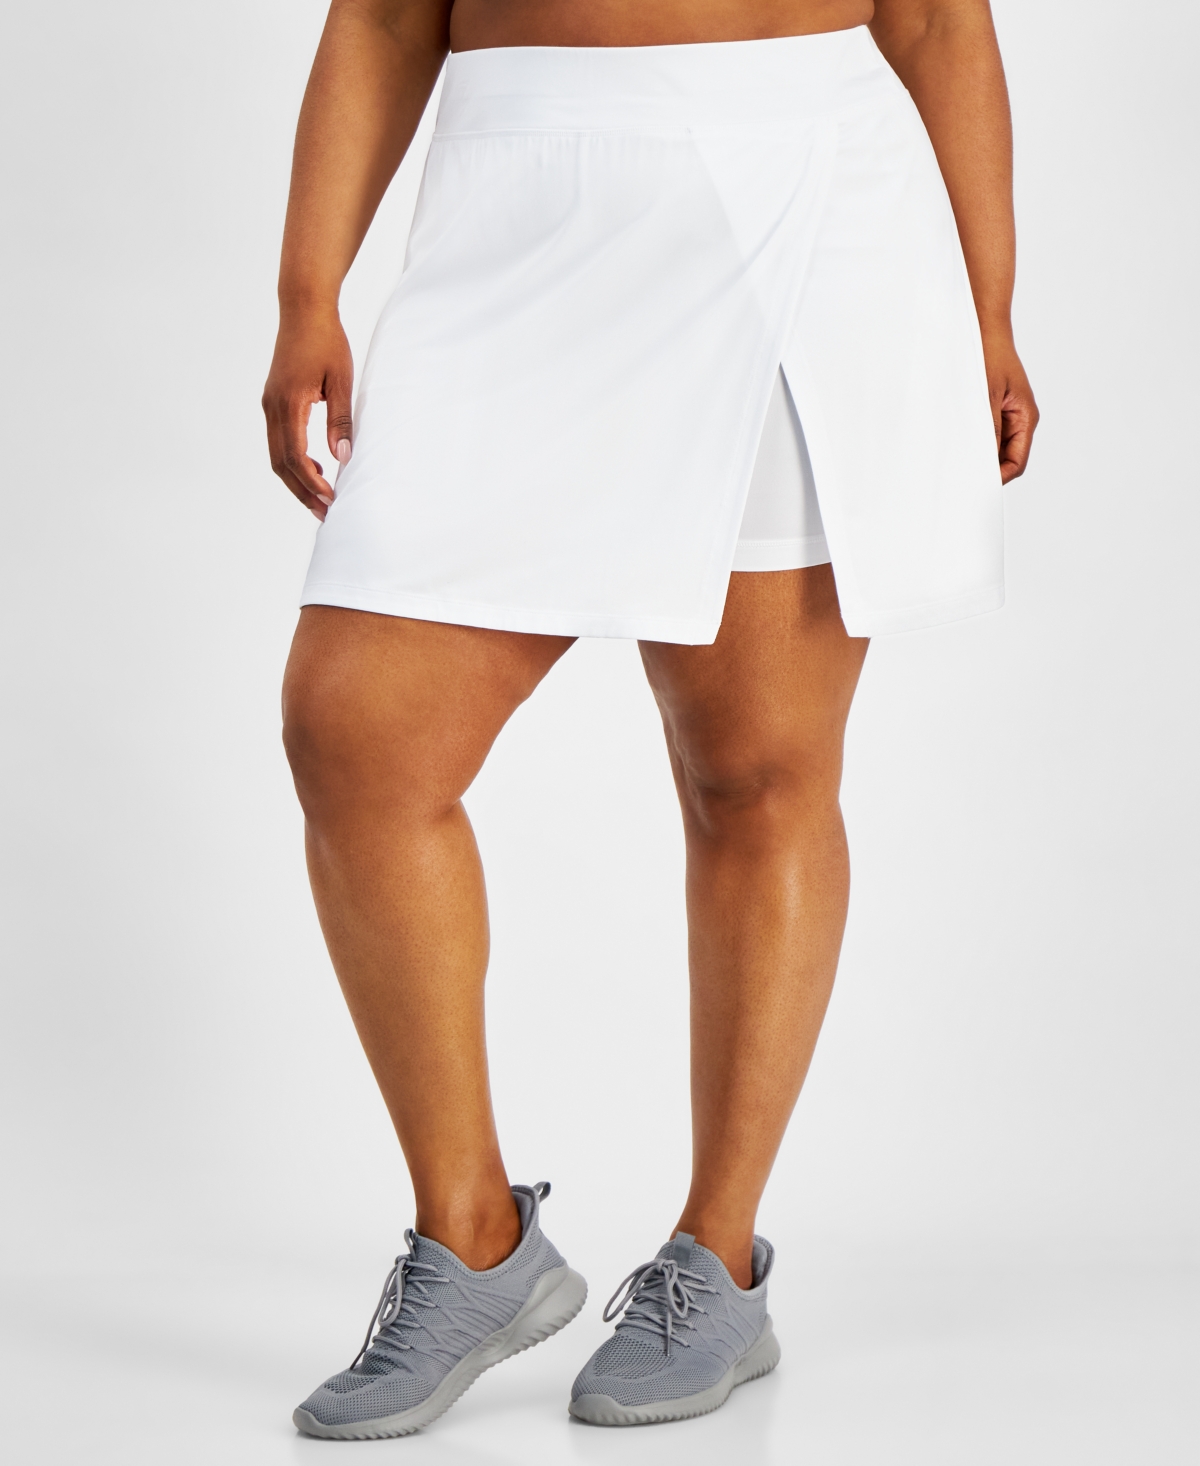 Plus Size Side-Slit Skort, Created for Macy's - Bright White